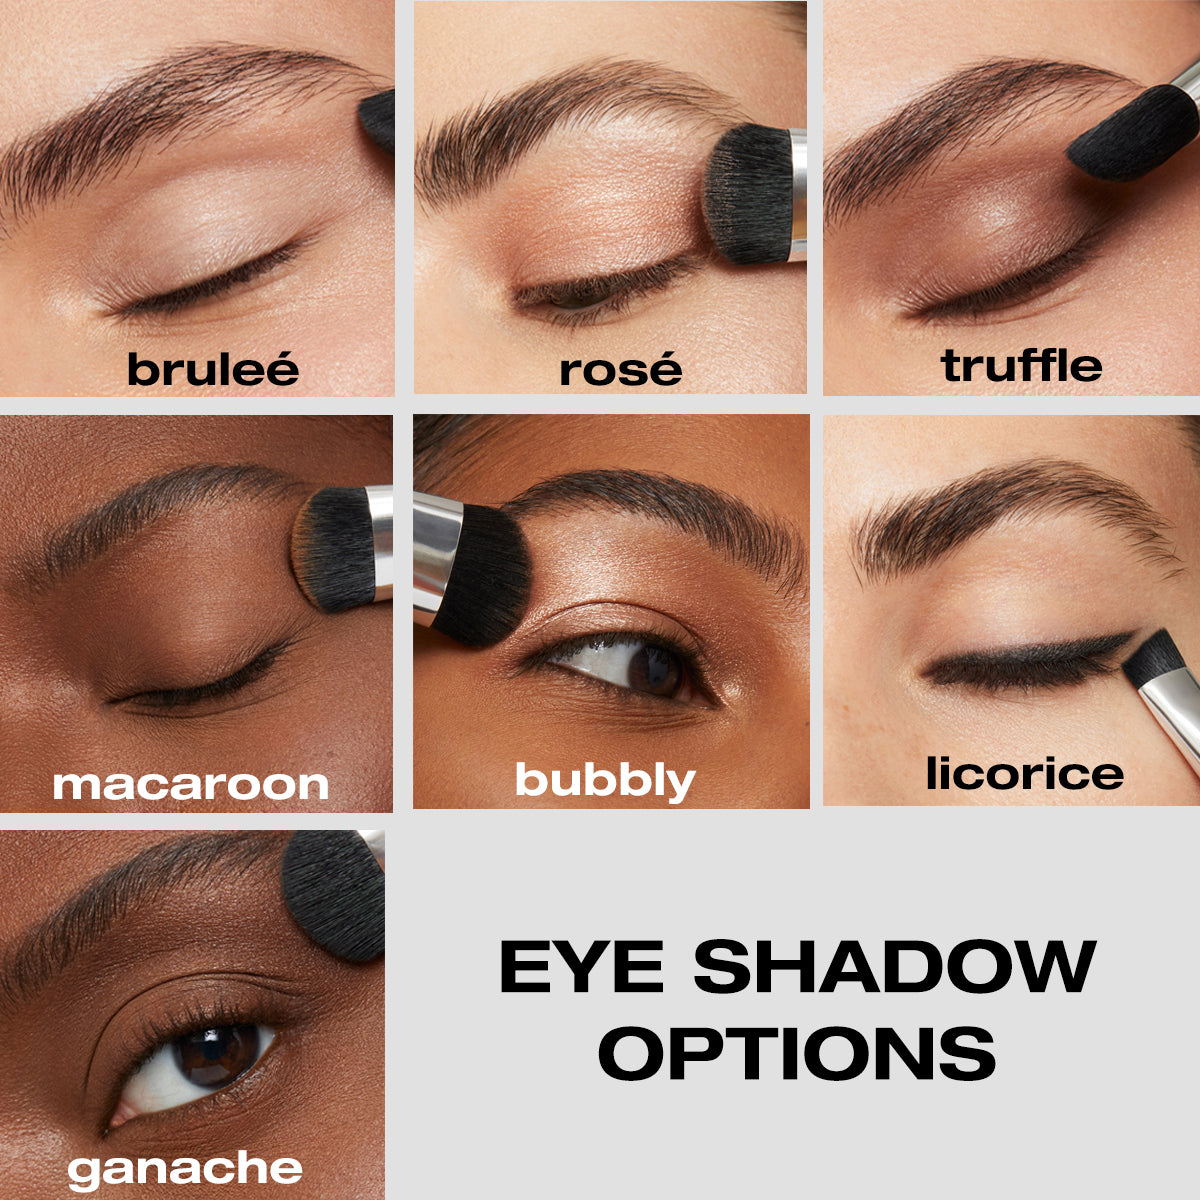 eye shadow options: Brulee, rose, truffle, macaroon, bubbly, licorice, ganache